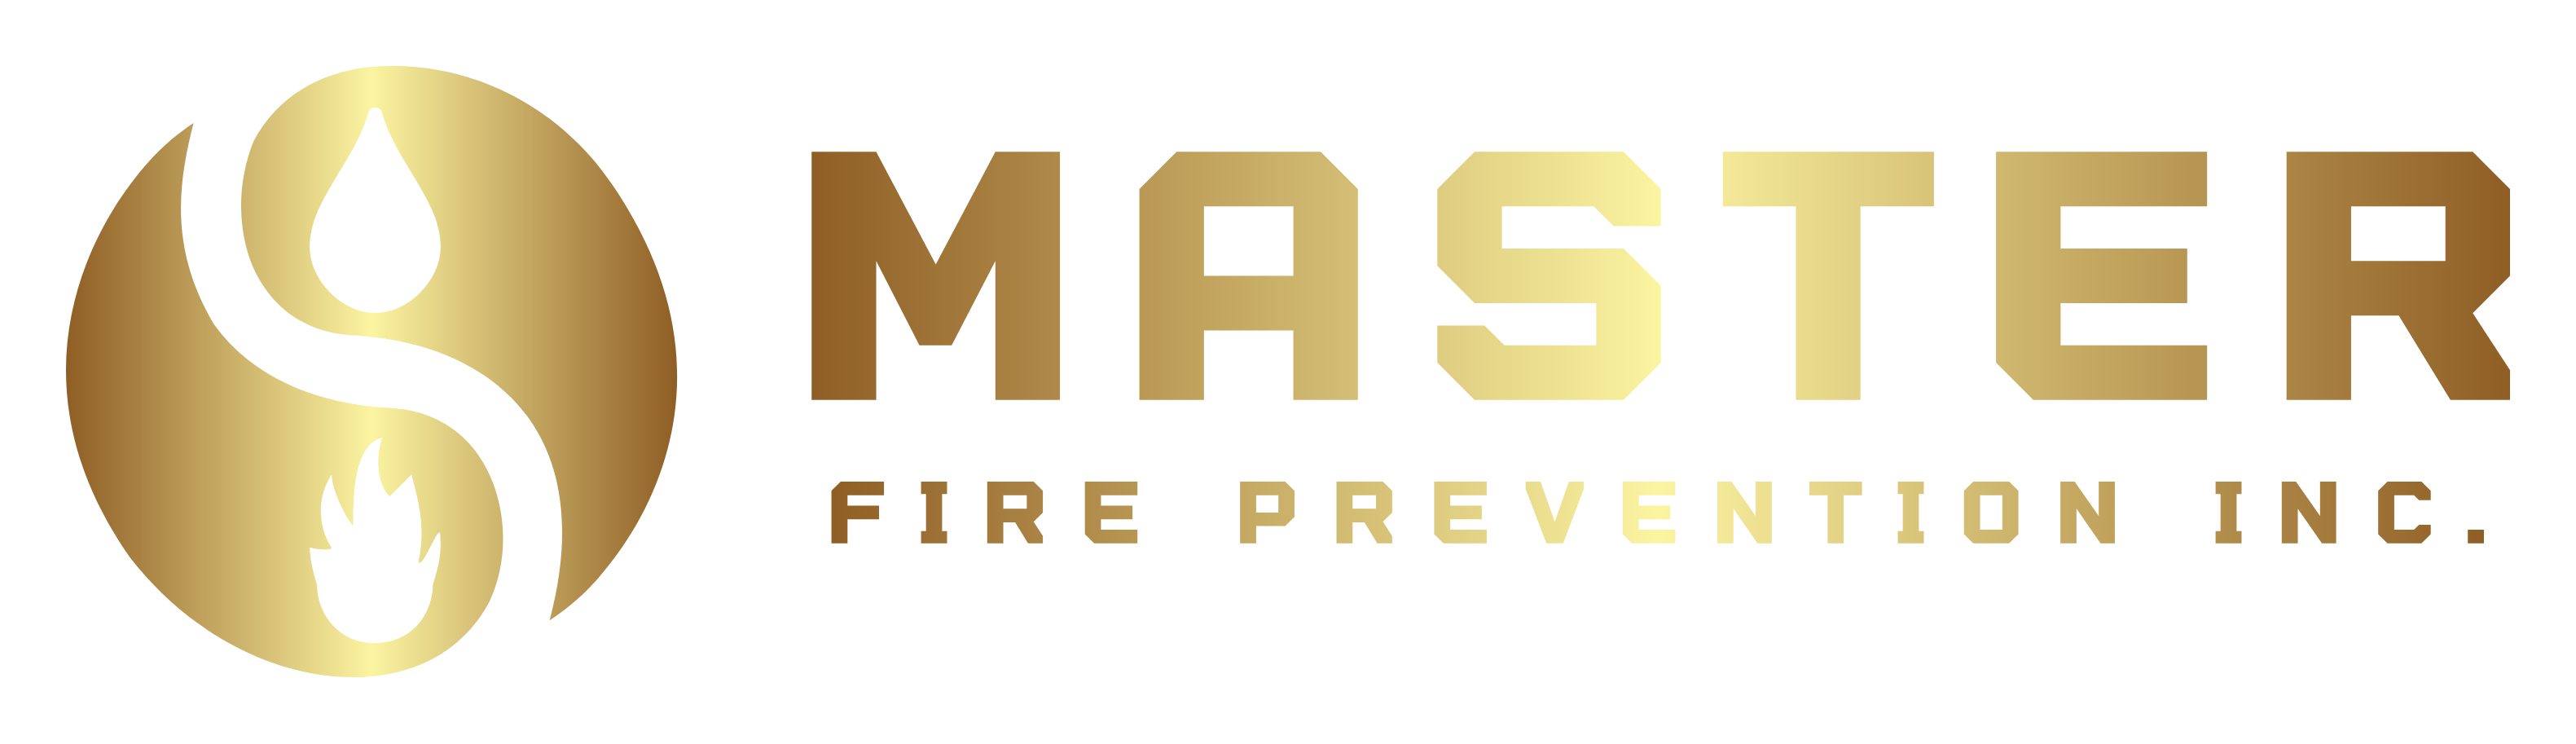 Master Fire Prevention Inc.